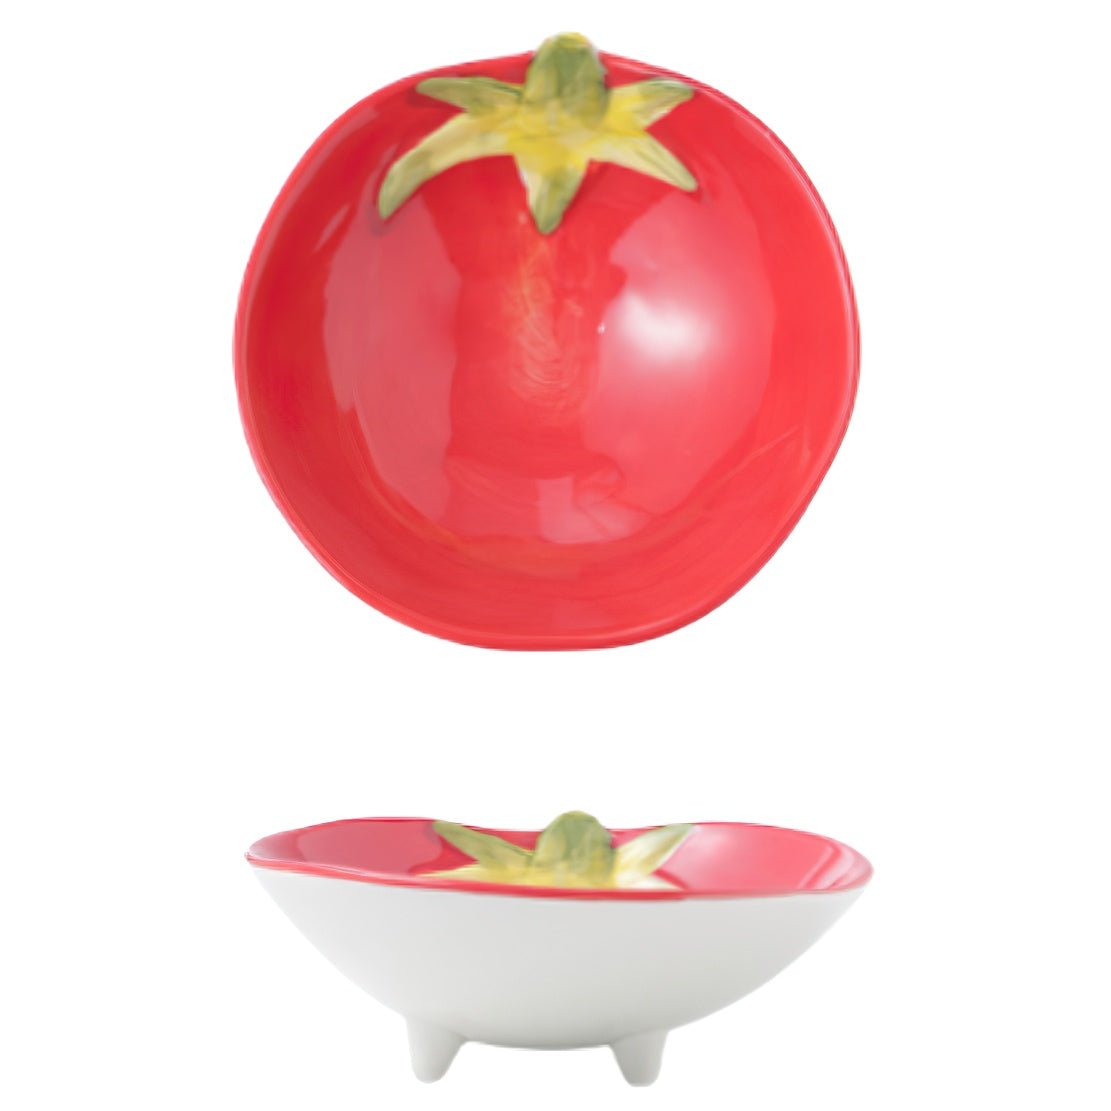 Ceramic, colourful vegetable dish bowl / Tomato